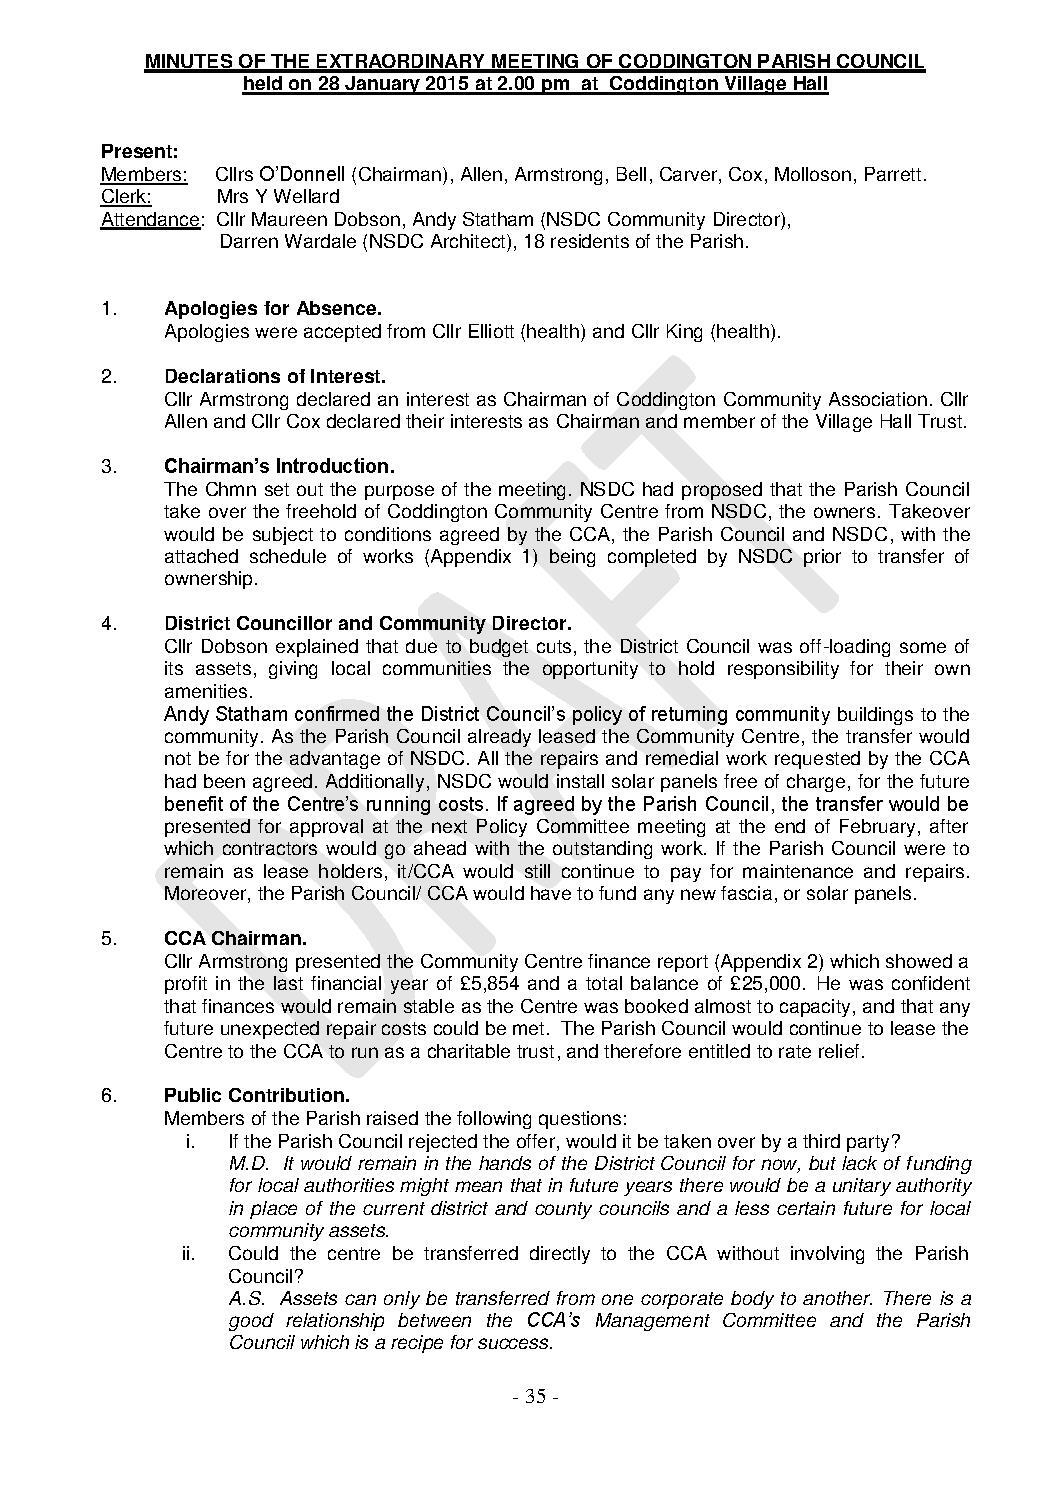 Parish Council Meeting 28 January 2015 Minutes